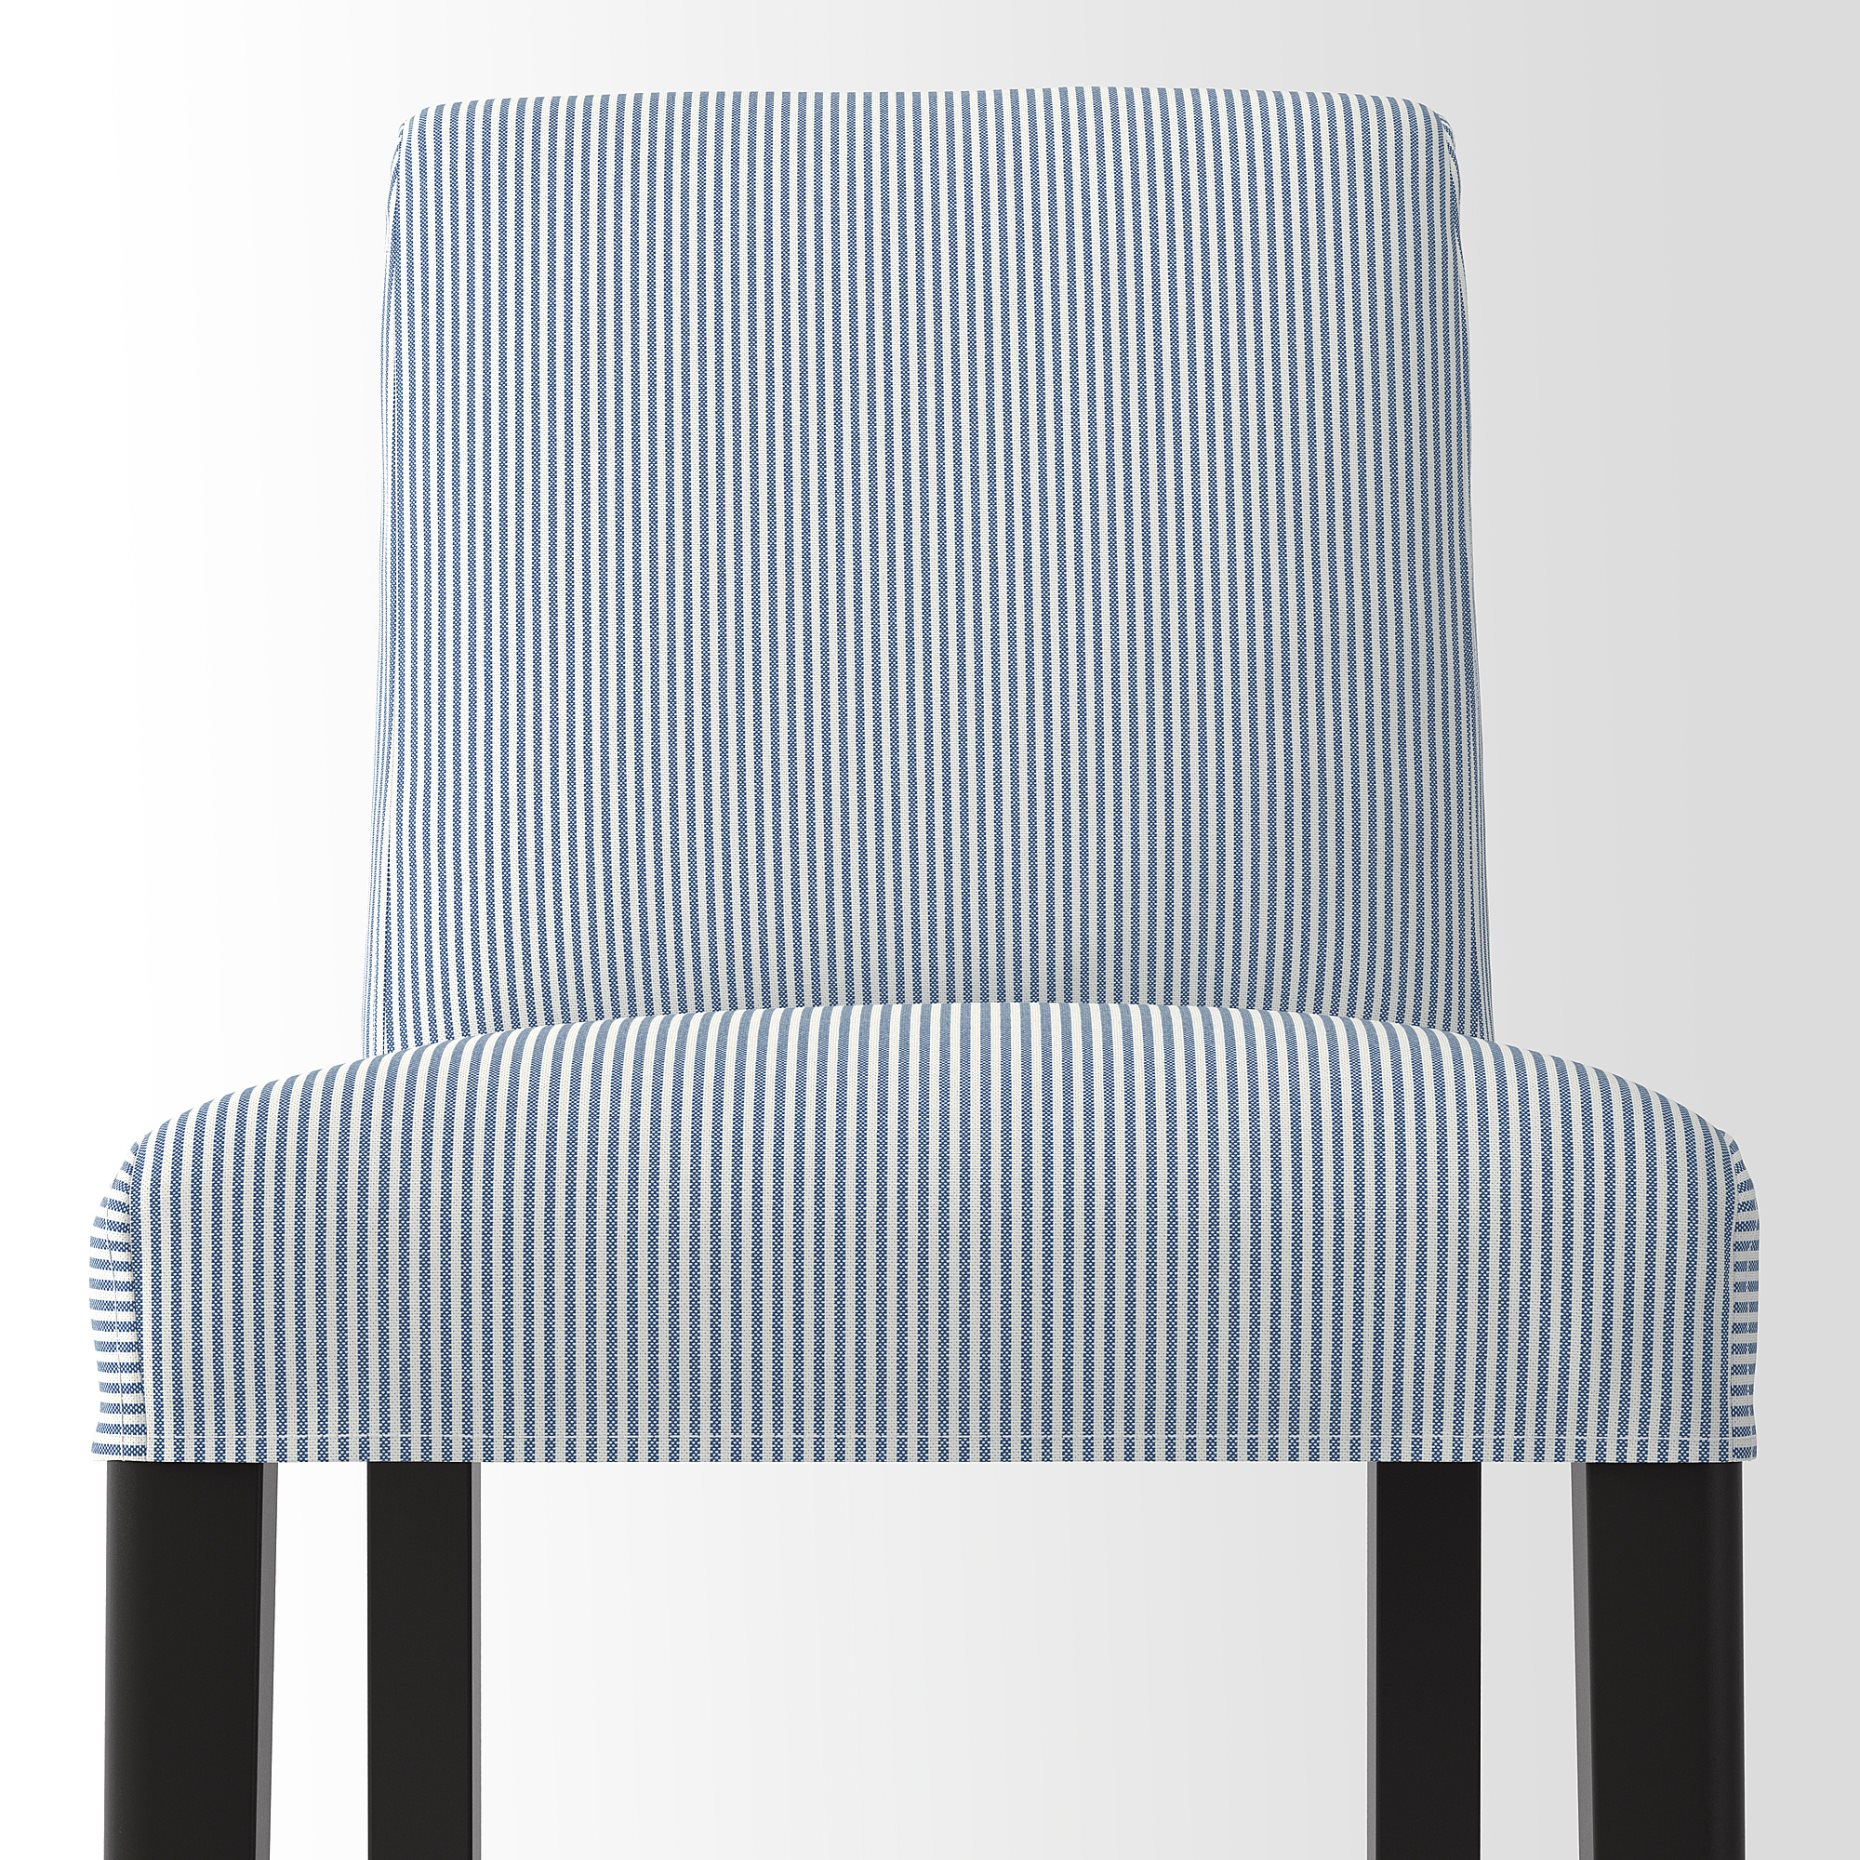 BERGMUND, bar stool with backrest, 62 cm, 994.196.64